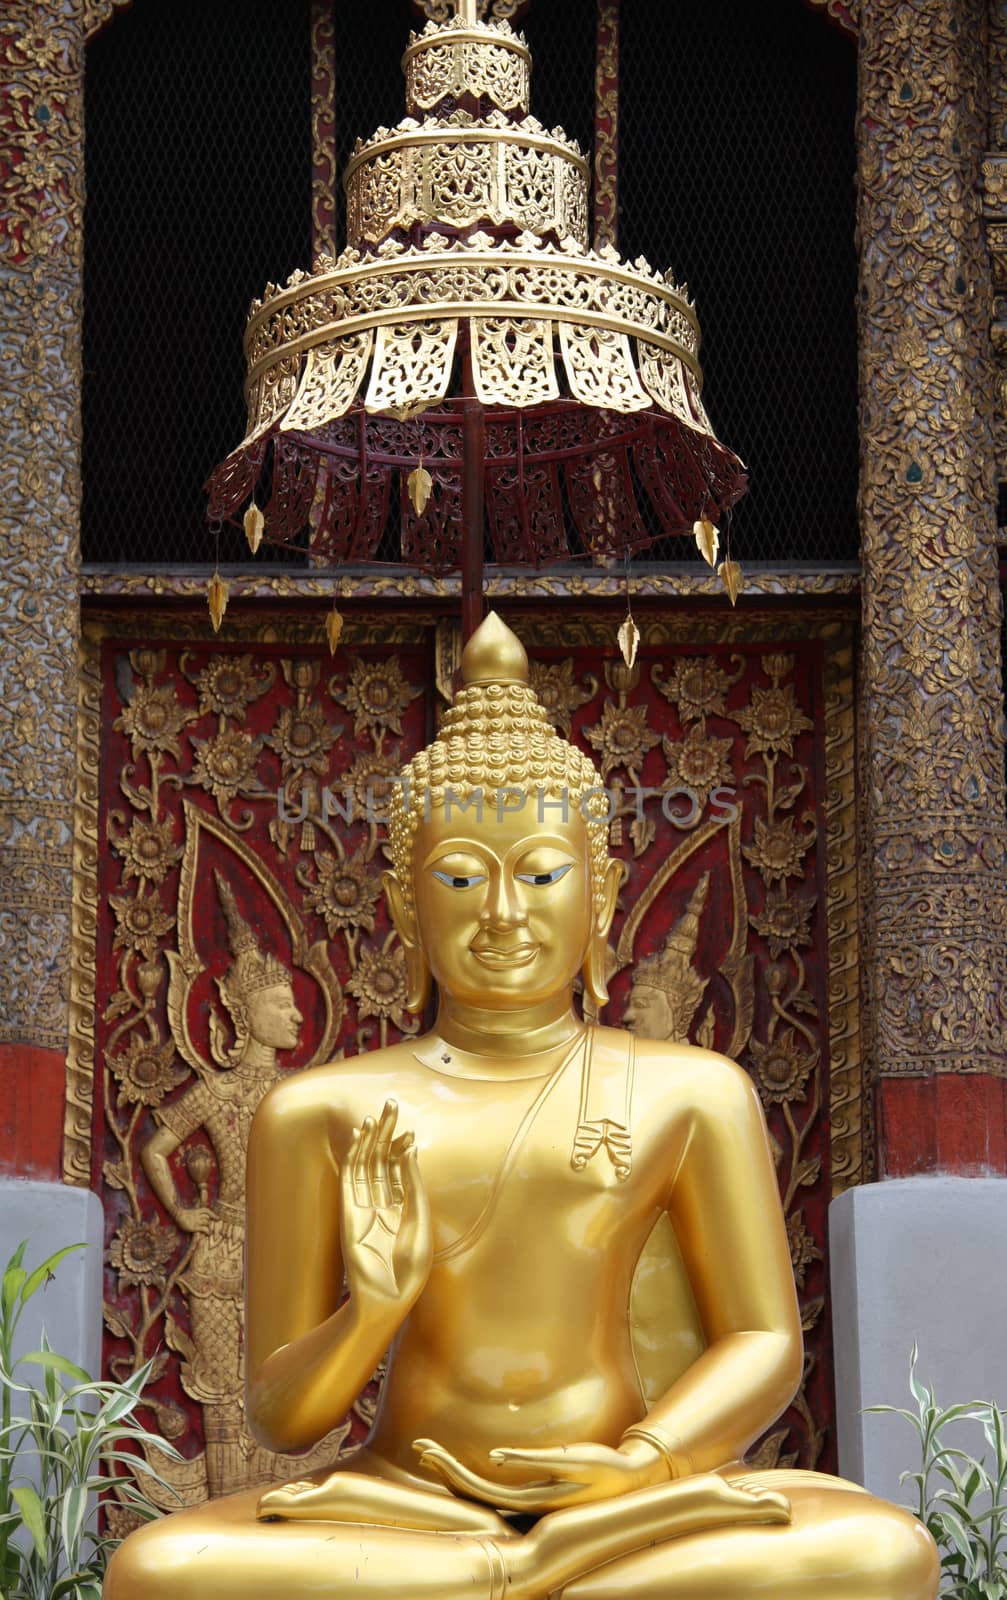 Golden Buddha in Thai temple in Chiang mai, Thailand